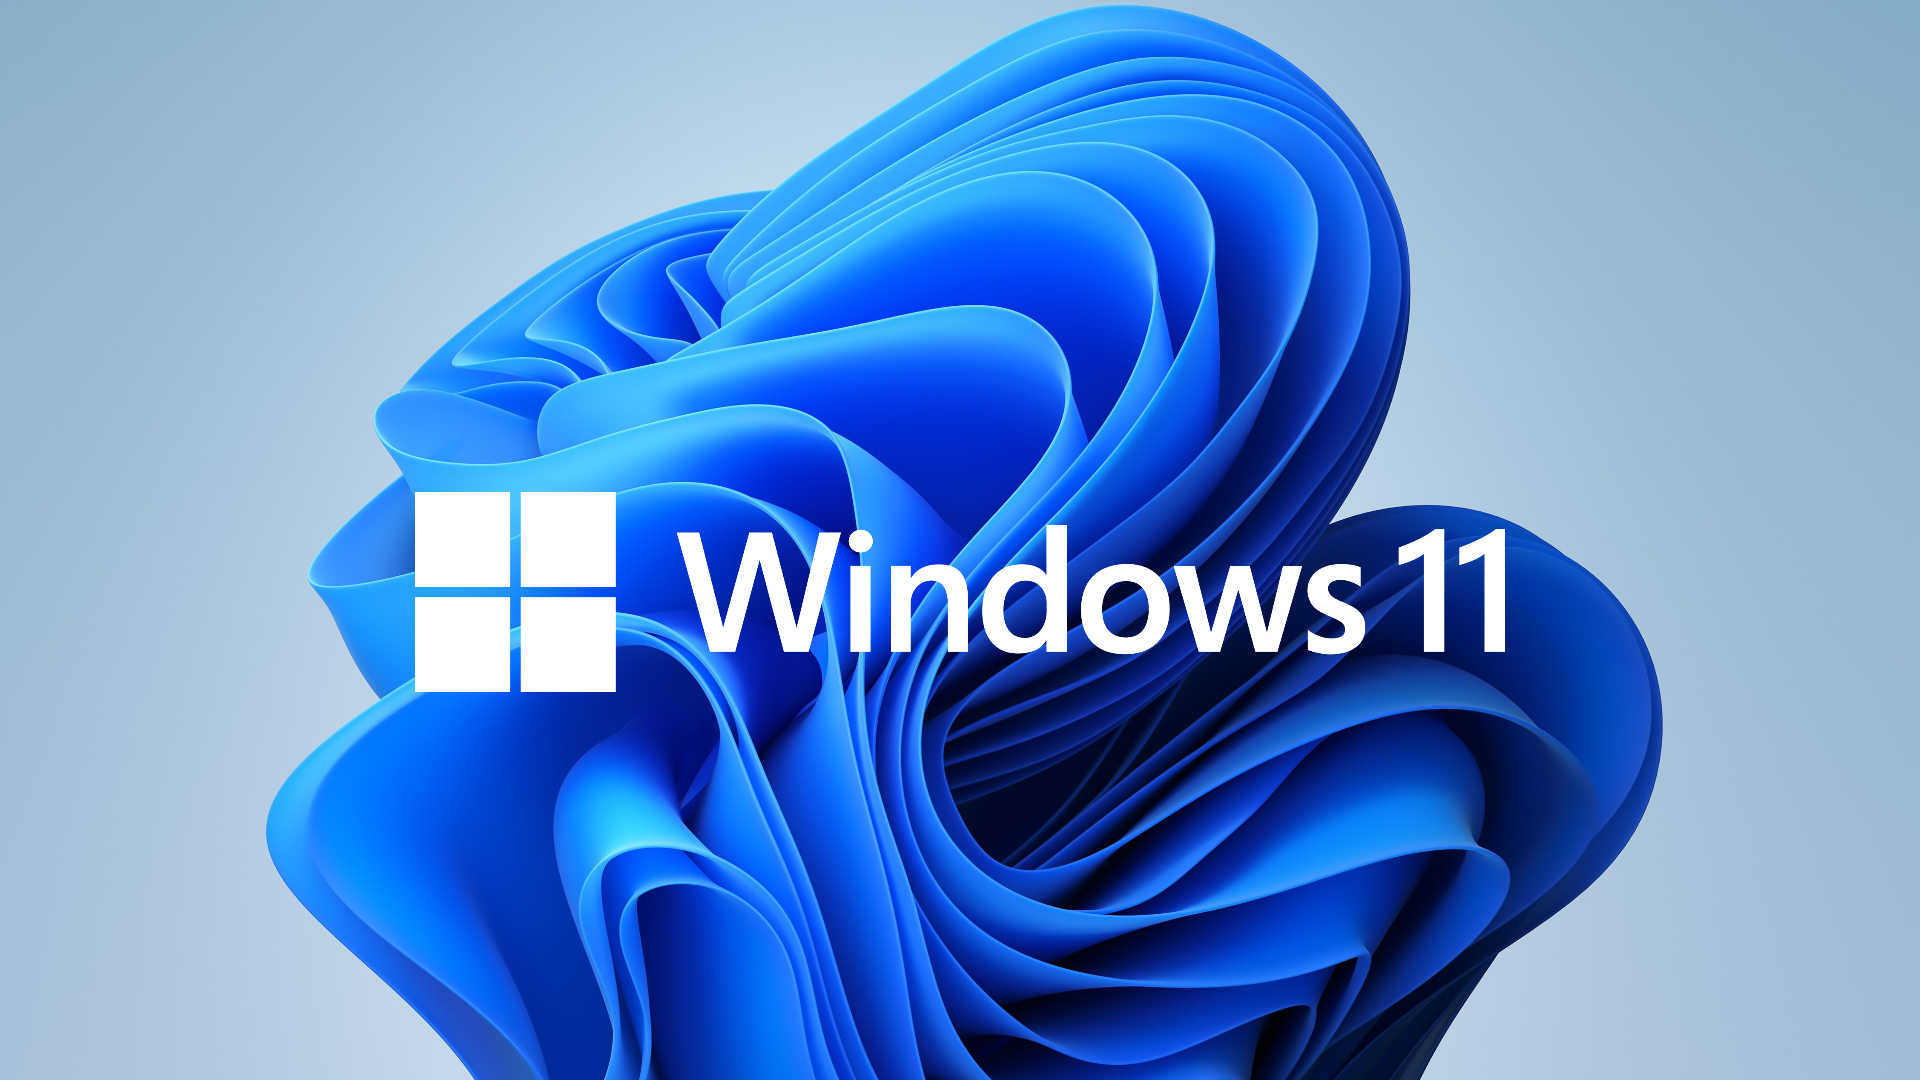 Windows 11 Backdrop and logo.